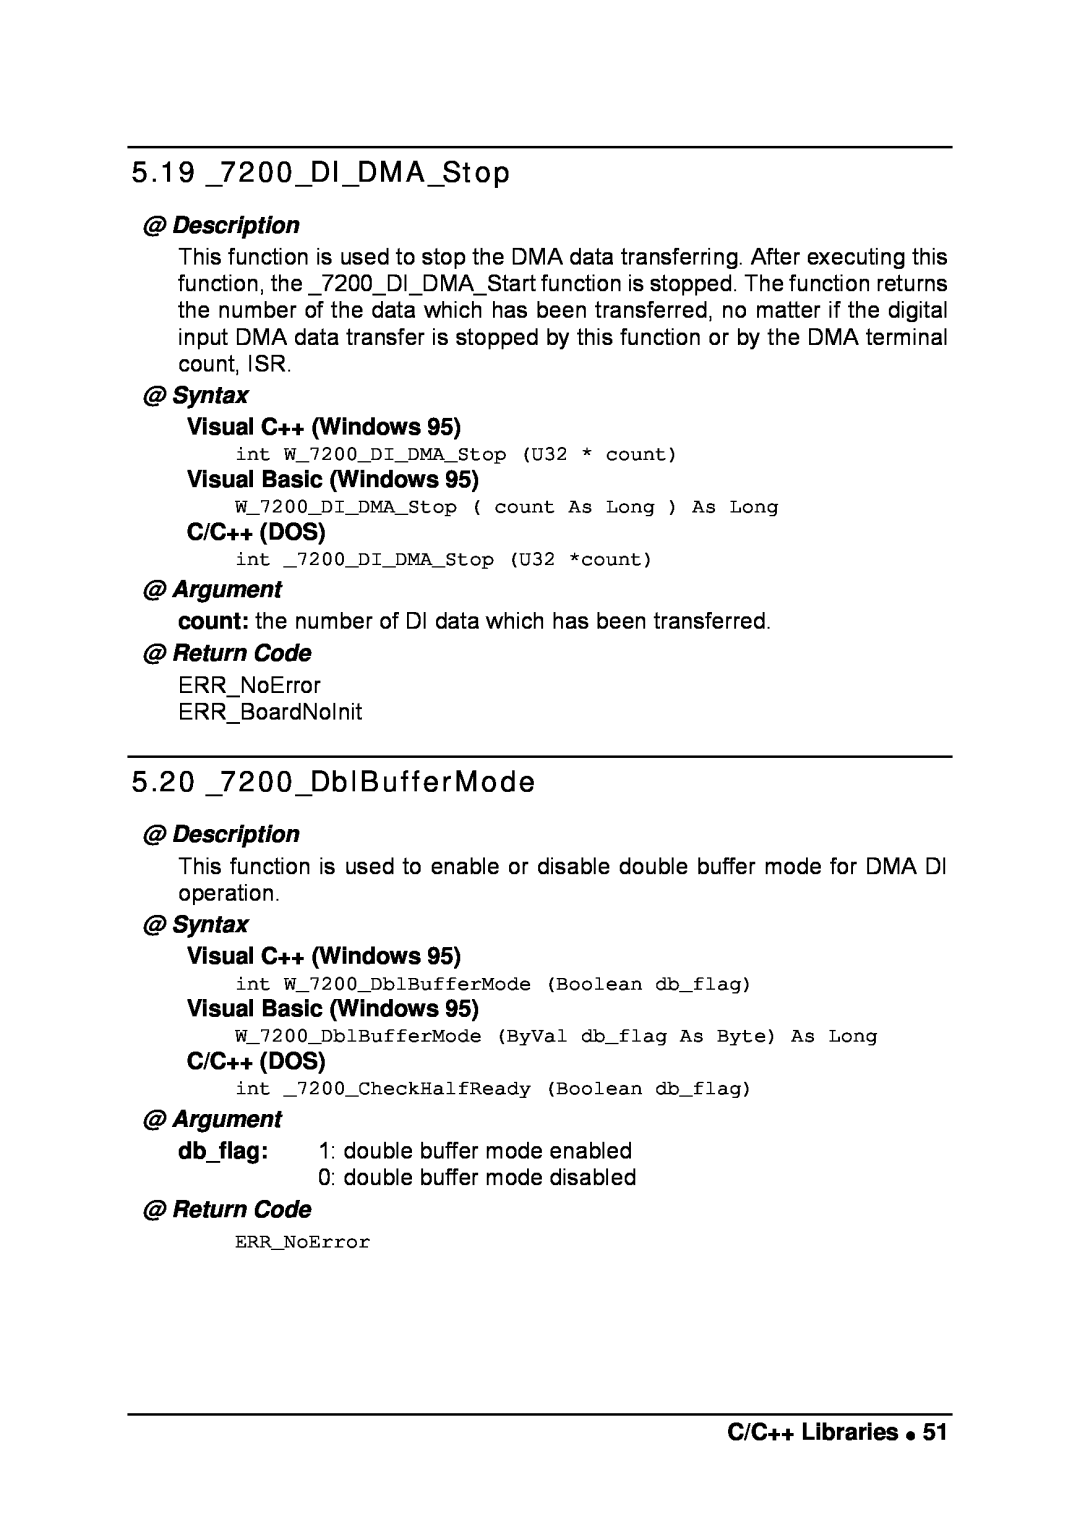 Intel LPCI-7200S manual 5.19 7200DIDMAStop, 5.20 7200DblBufferMode, @ Description, @ Syntax, Visual C++ Windows, C/C++ Dos 